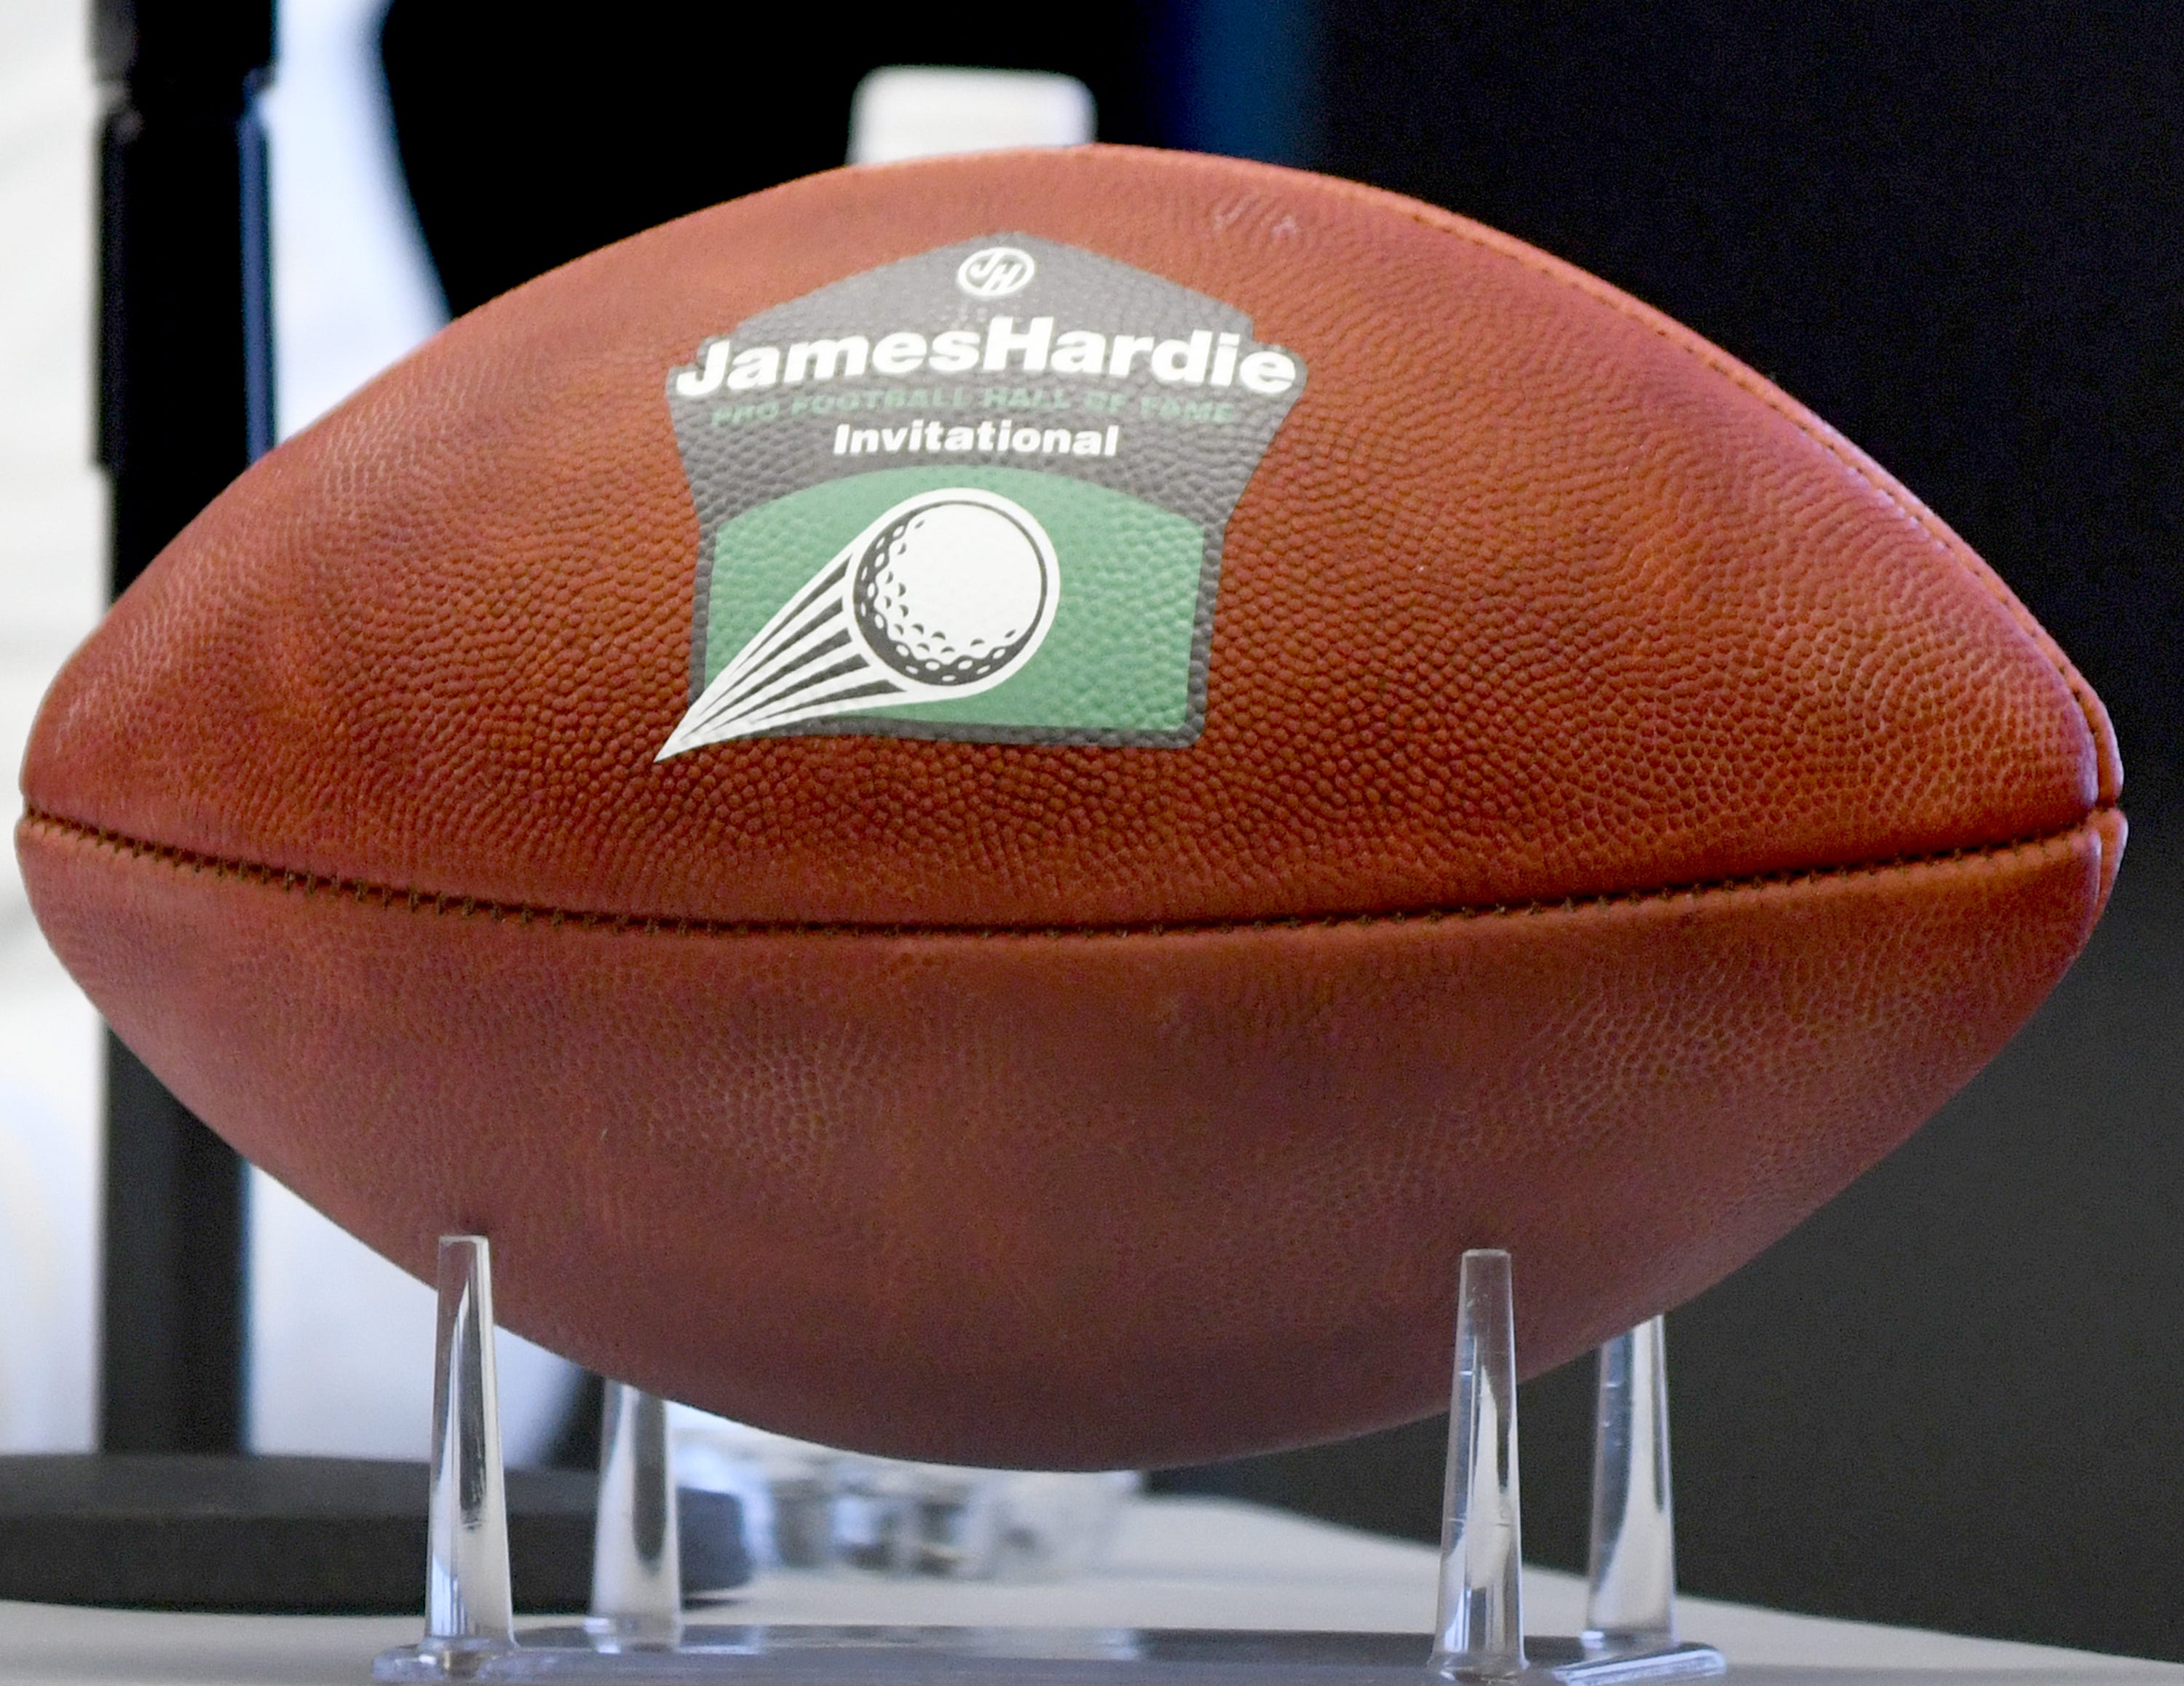 The James Hardie Pro Football Hall of Fame Invitational